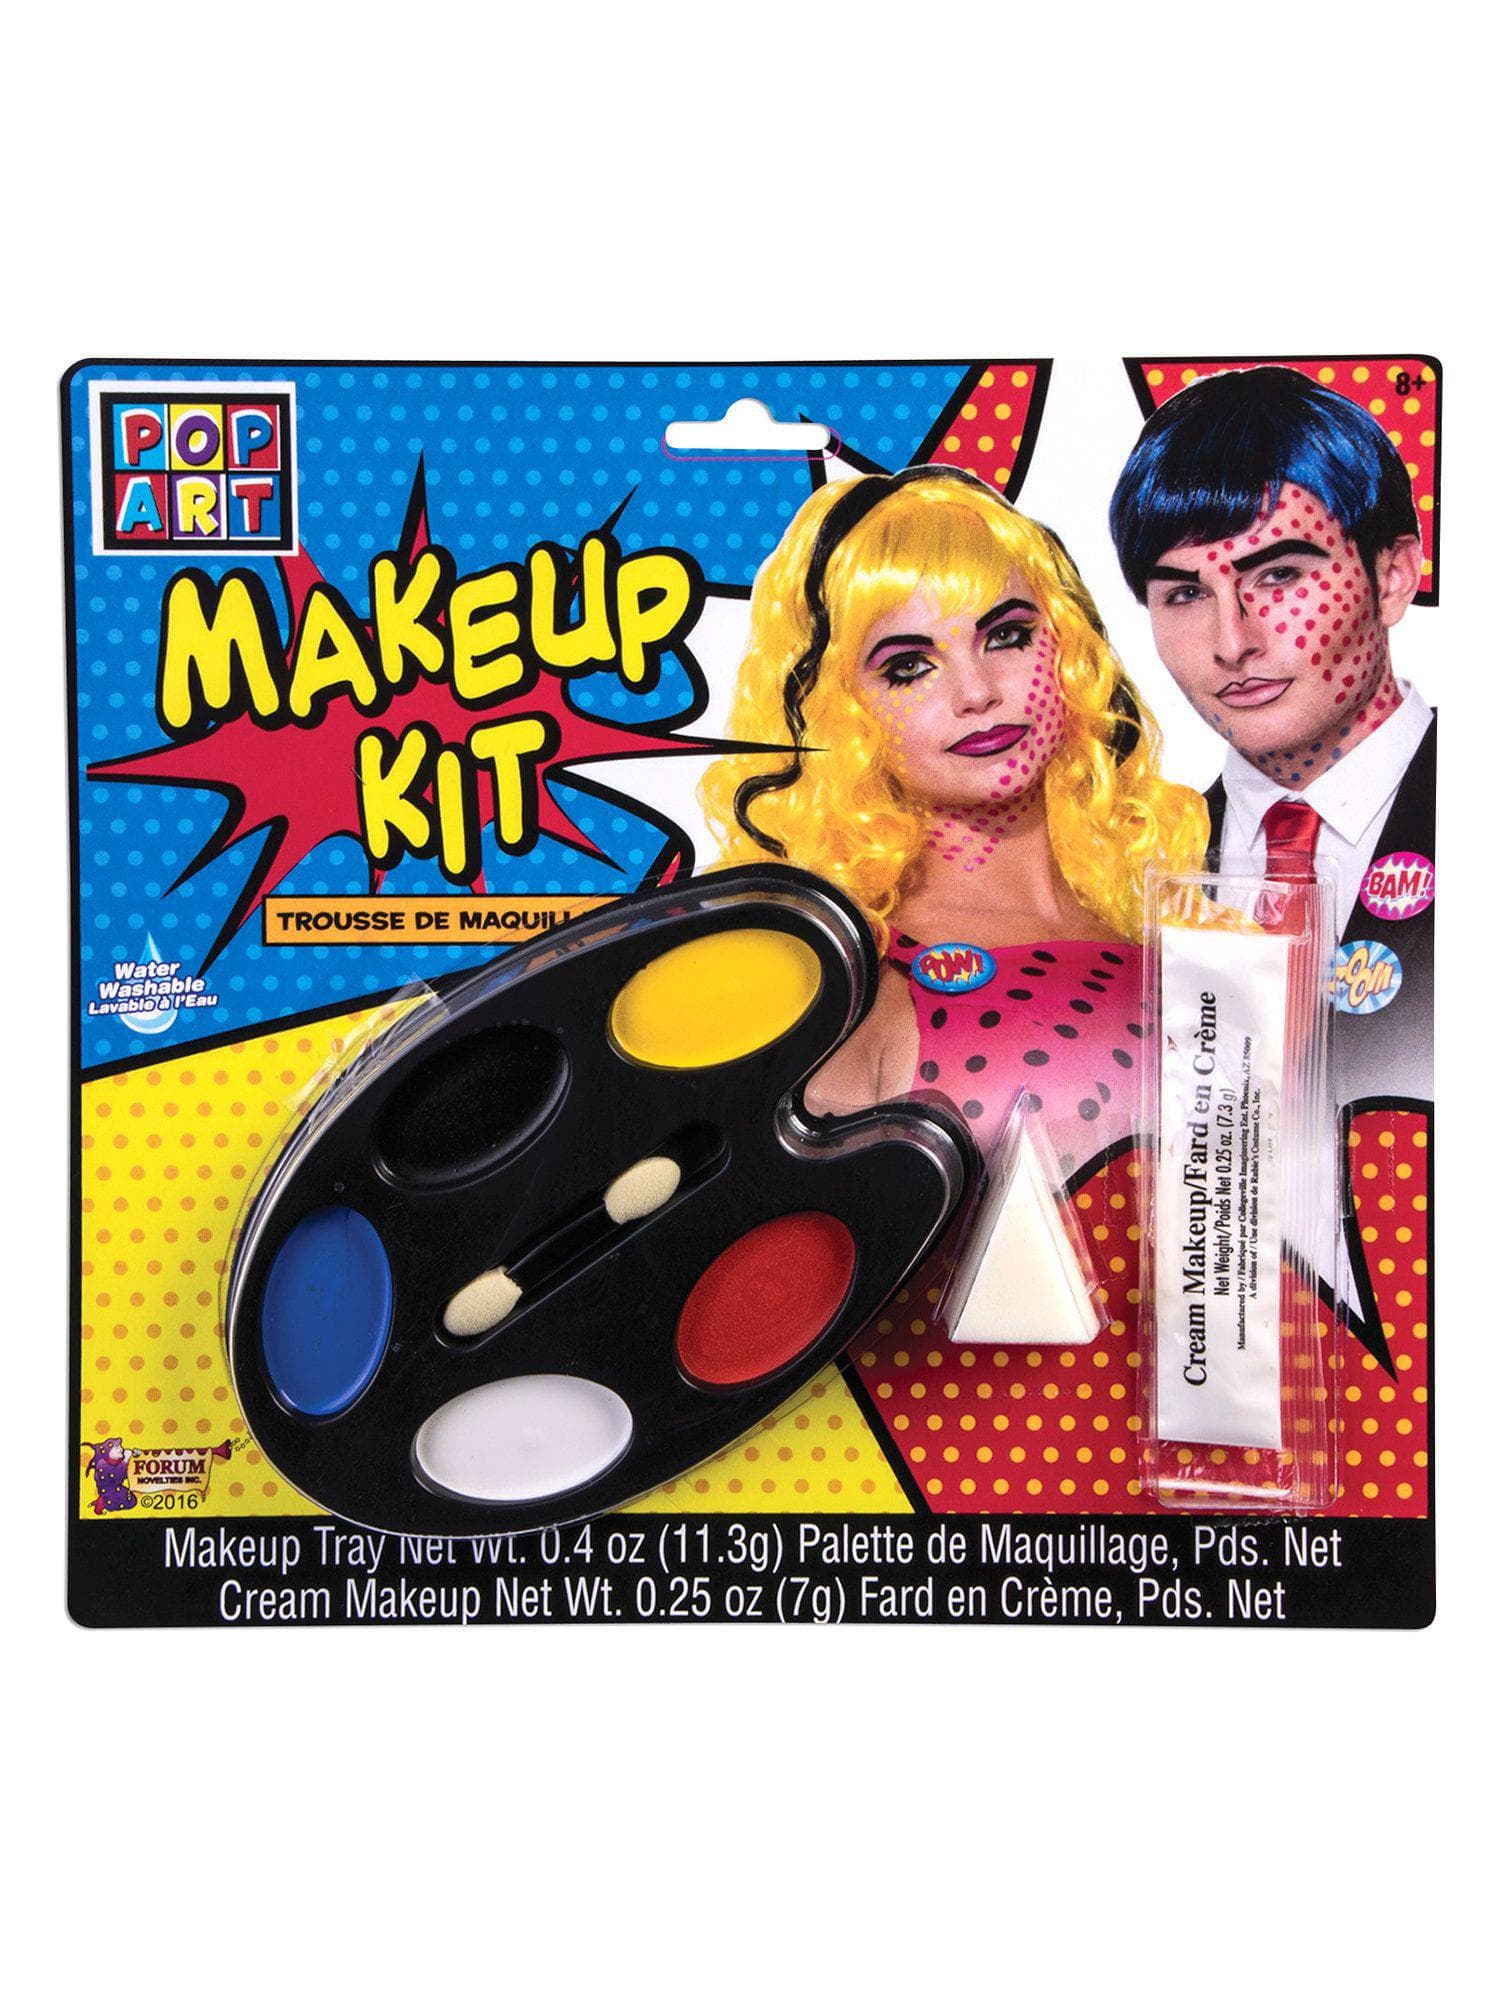 Pop Art Makeup Kit - costumes.com